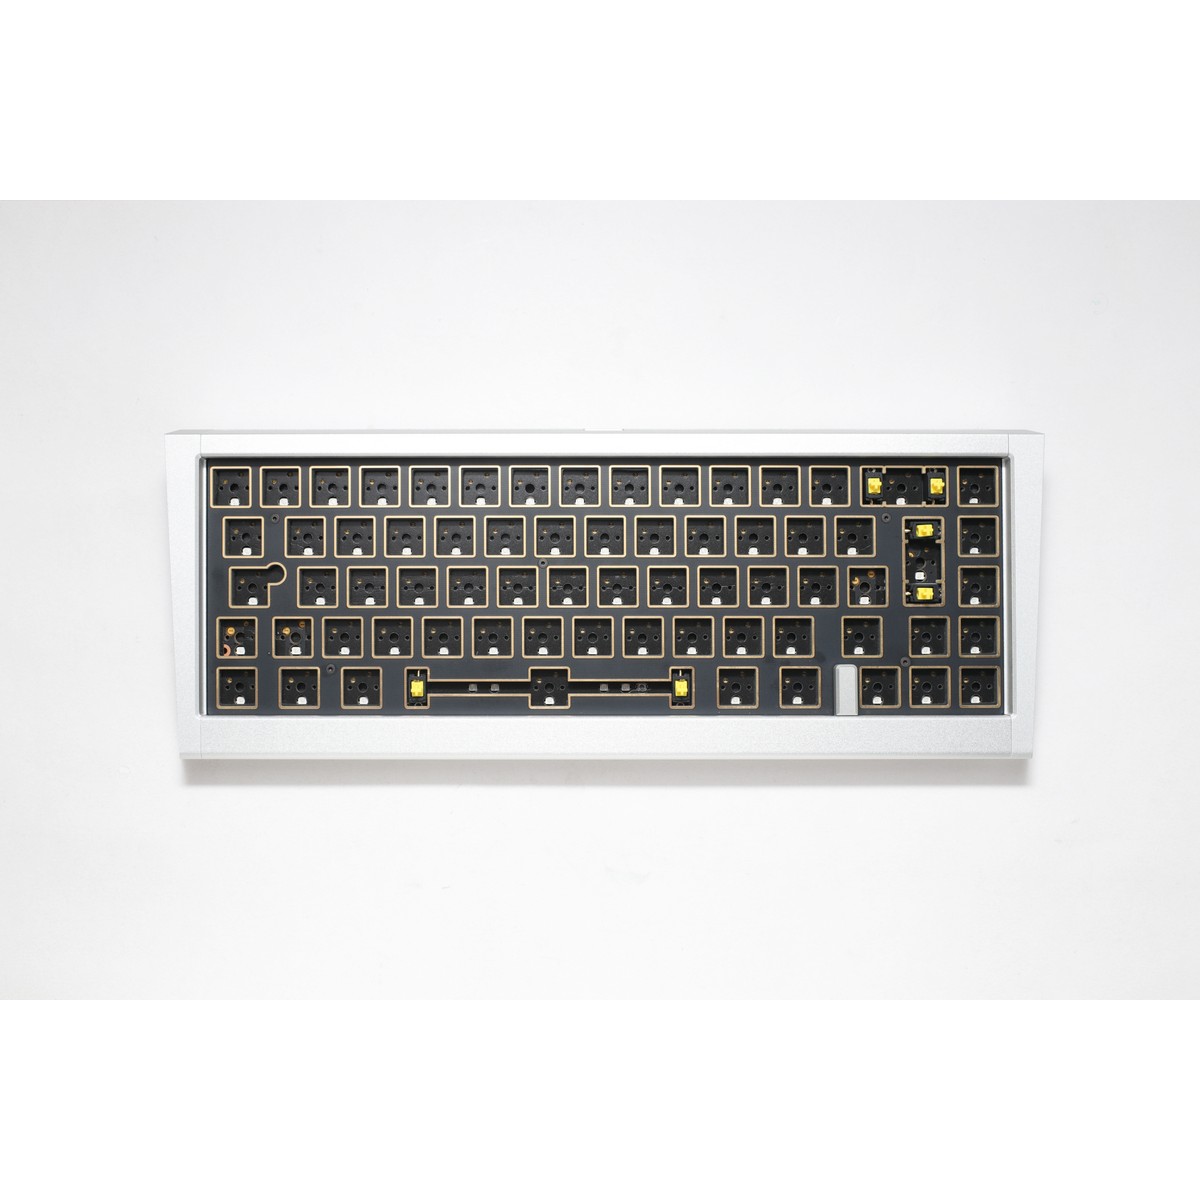 Ducky ProjectD Outlaw65 Barebone Custom Keyboard - Silver (First Edition)